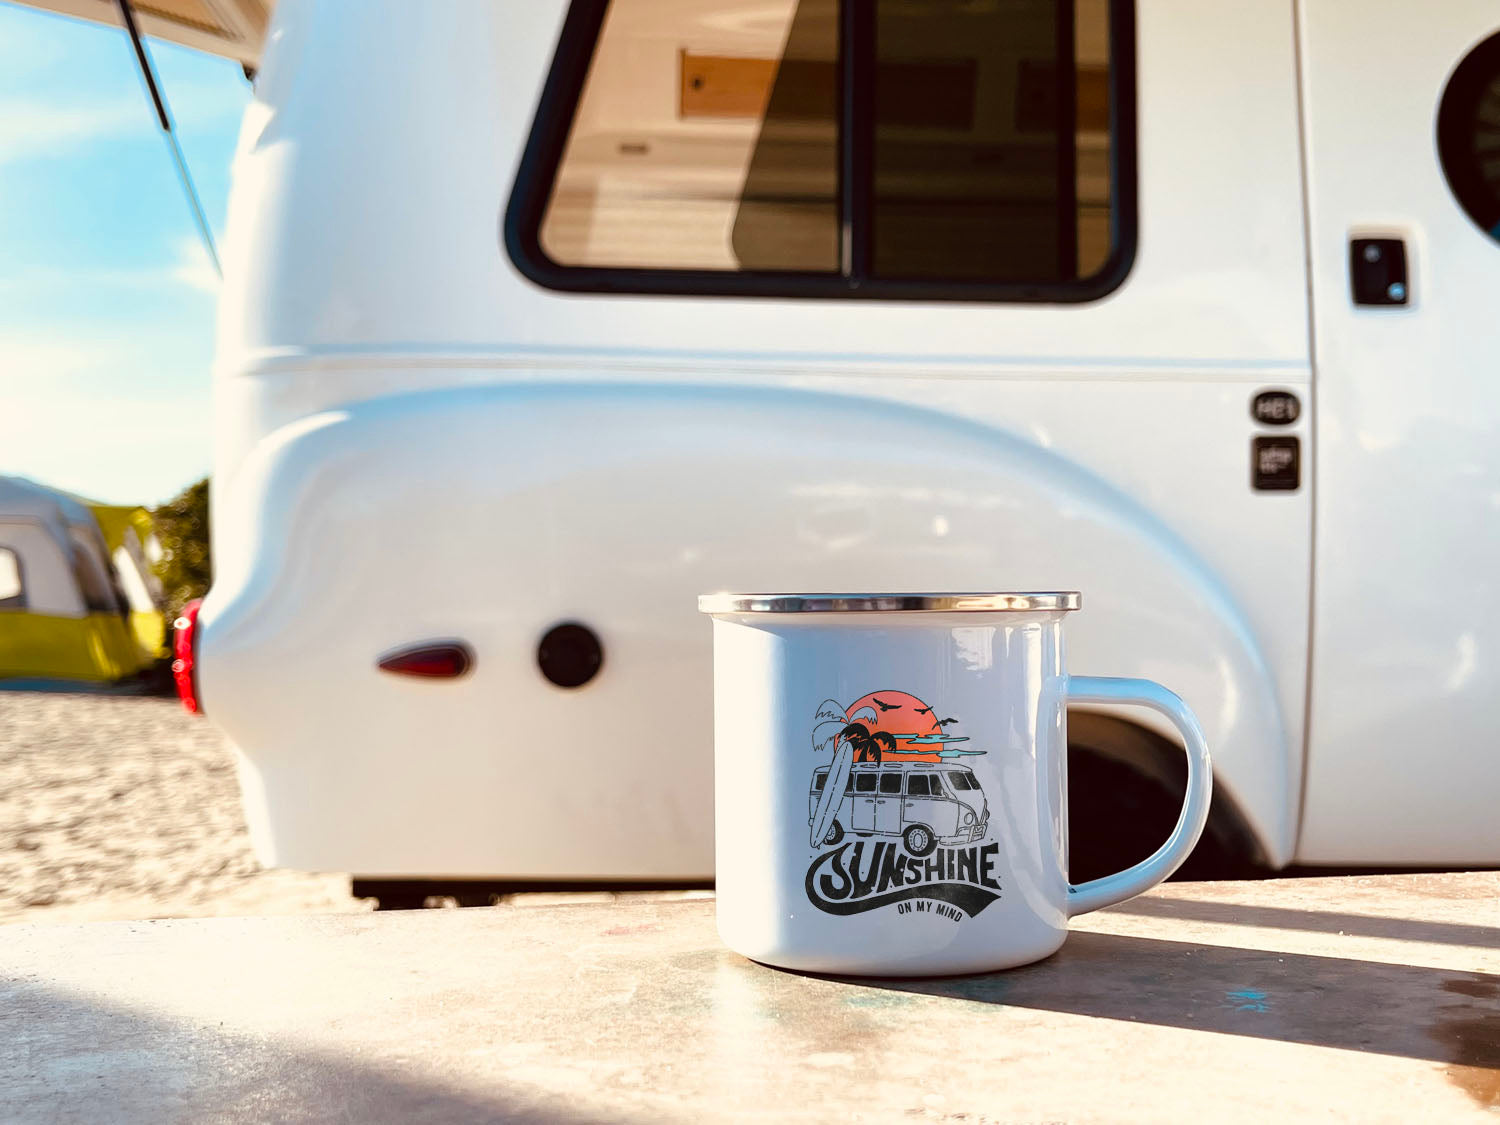 Retro Vintage Sunset Mountain Camping Outdoor Ceramic Coffee Mug